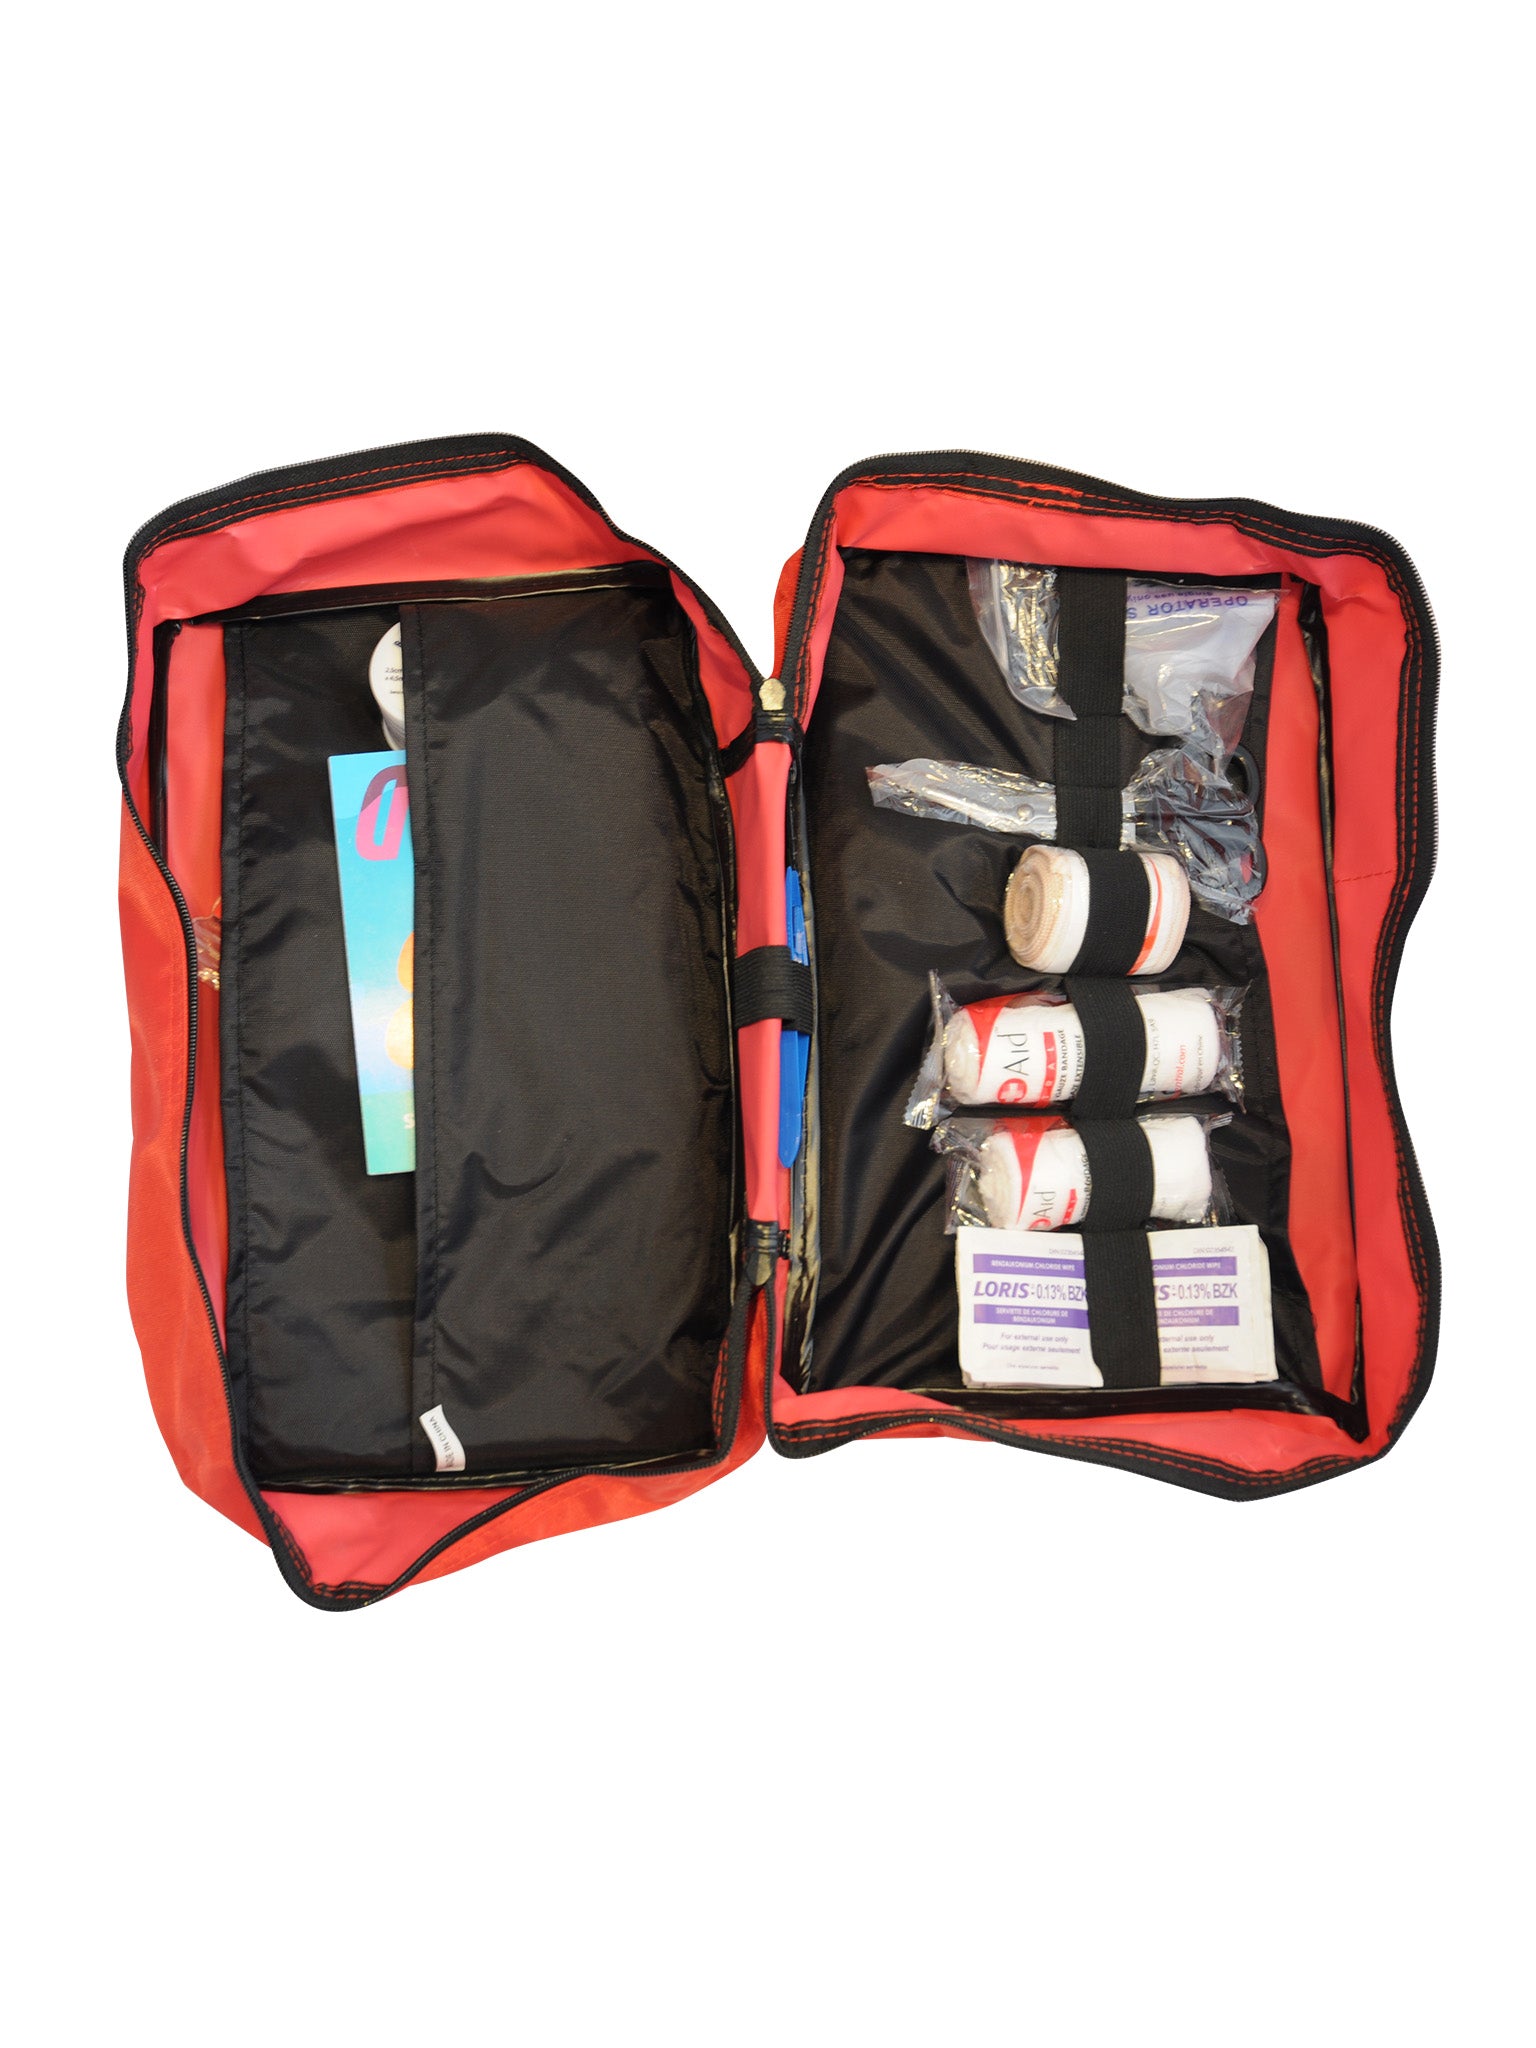 Lifeguard First-Aid Kit